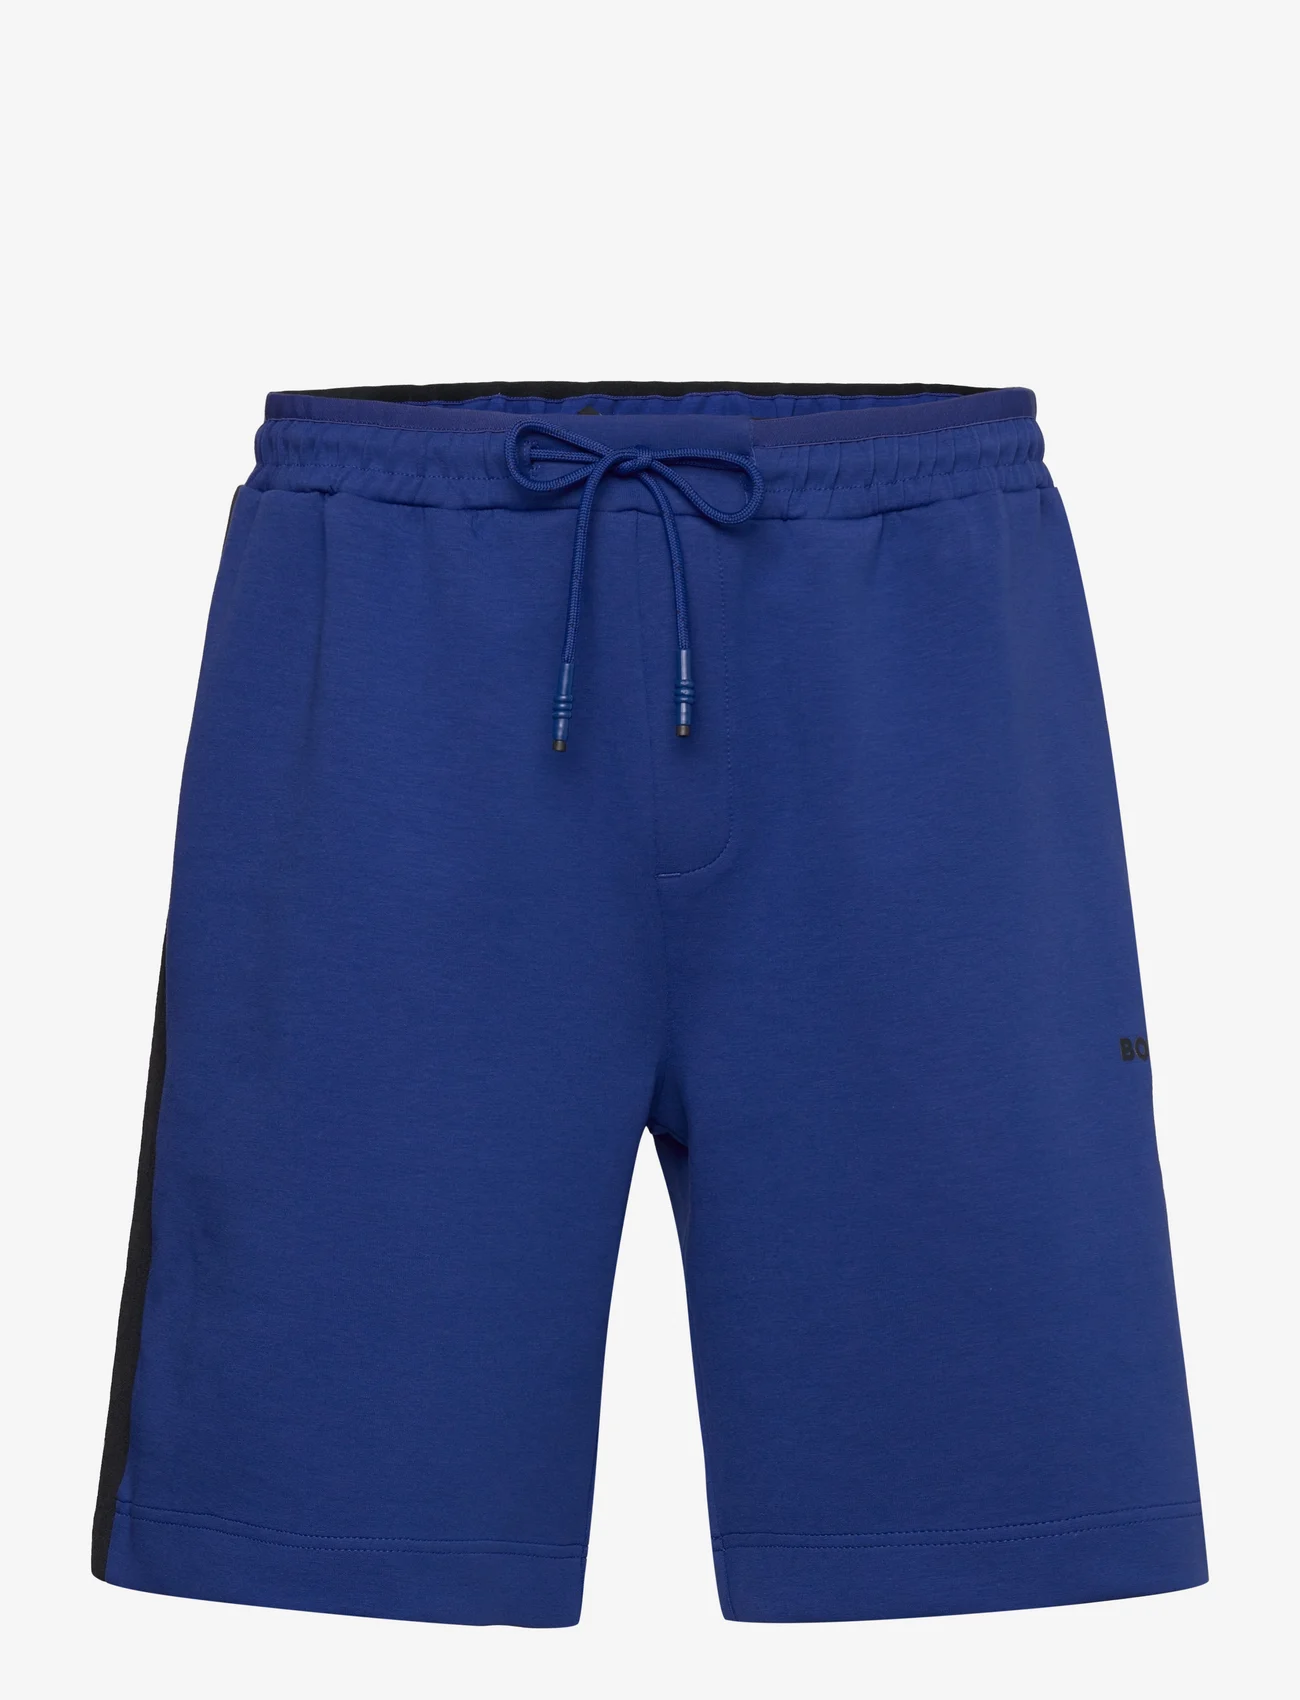 BOSS - Headlo 1 - training shorts - bright blue - 0